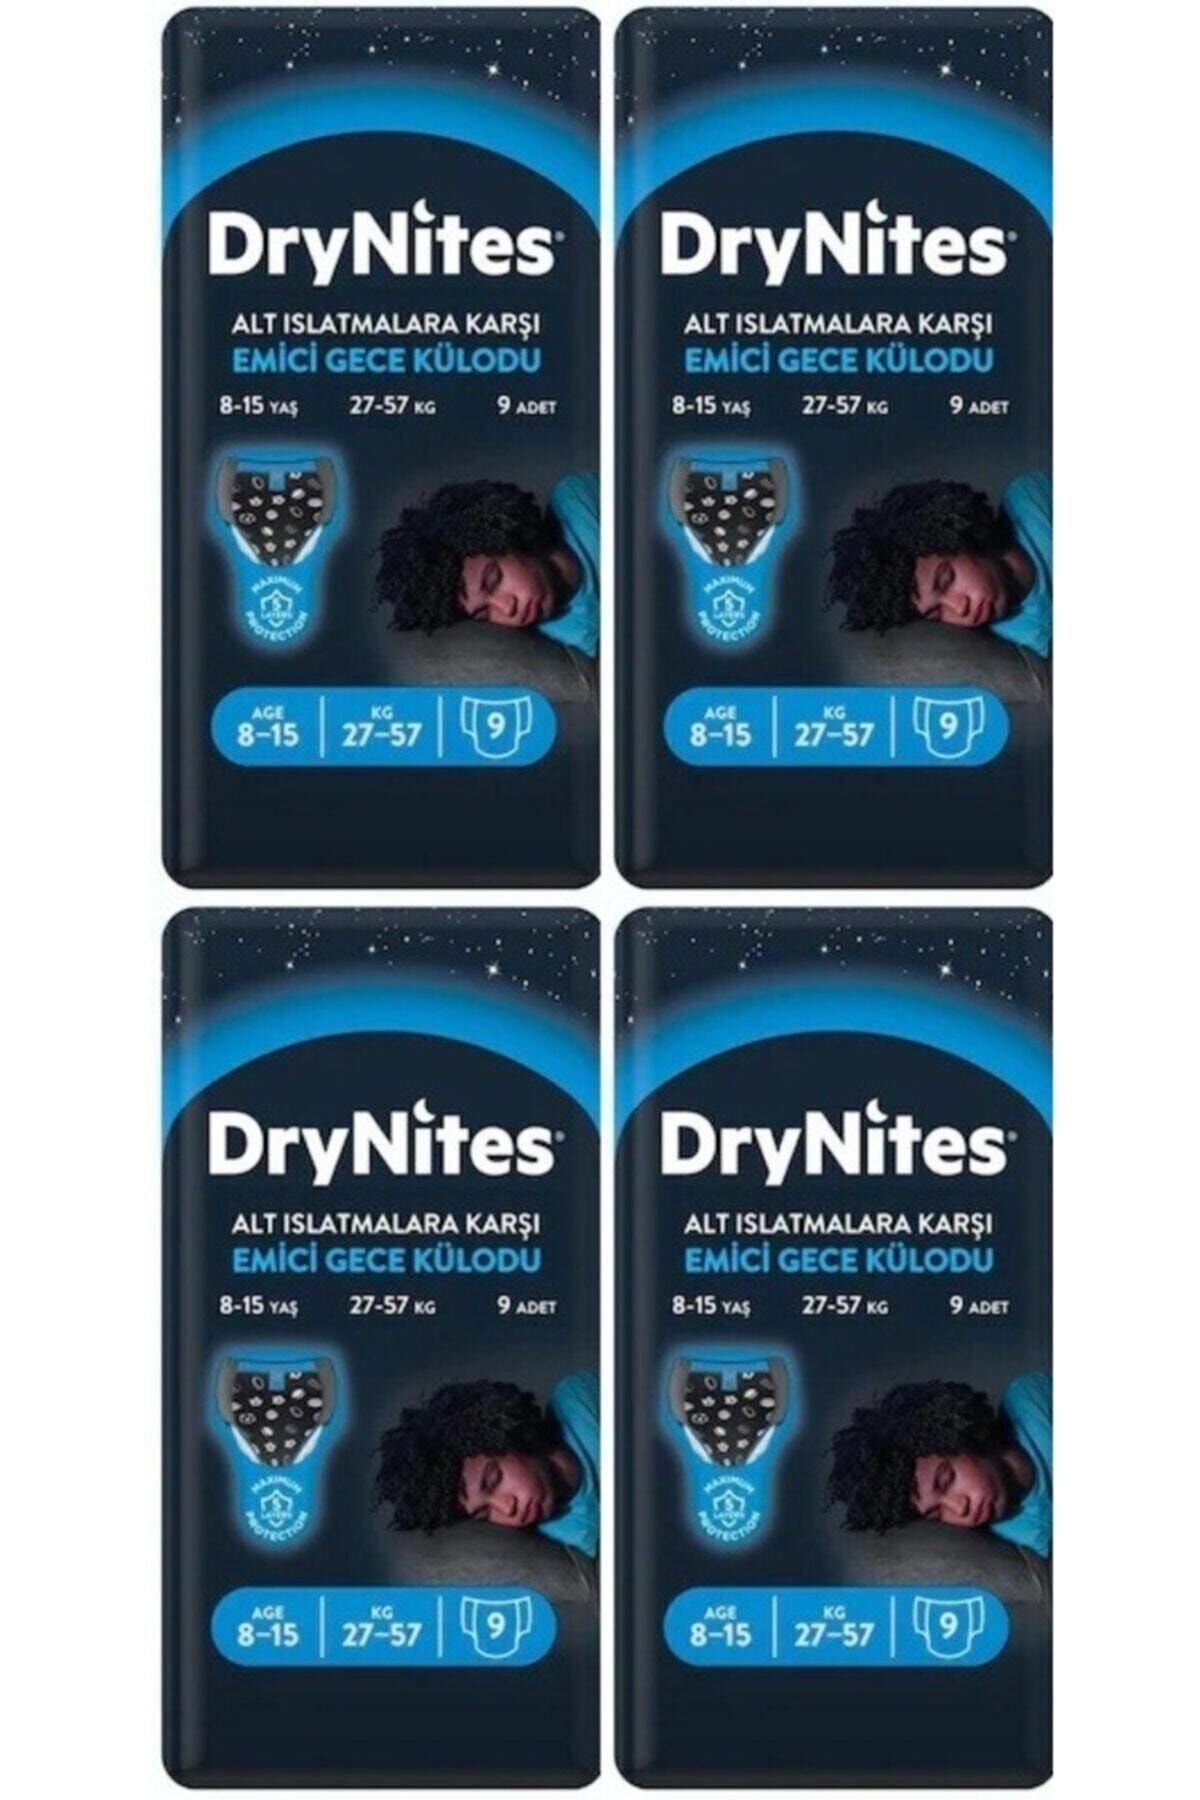 DryNites Erkek Emici Gece Külodu 8-15 Yaş 27-57kg 36 Adet